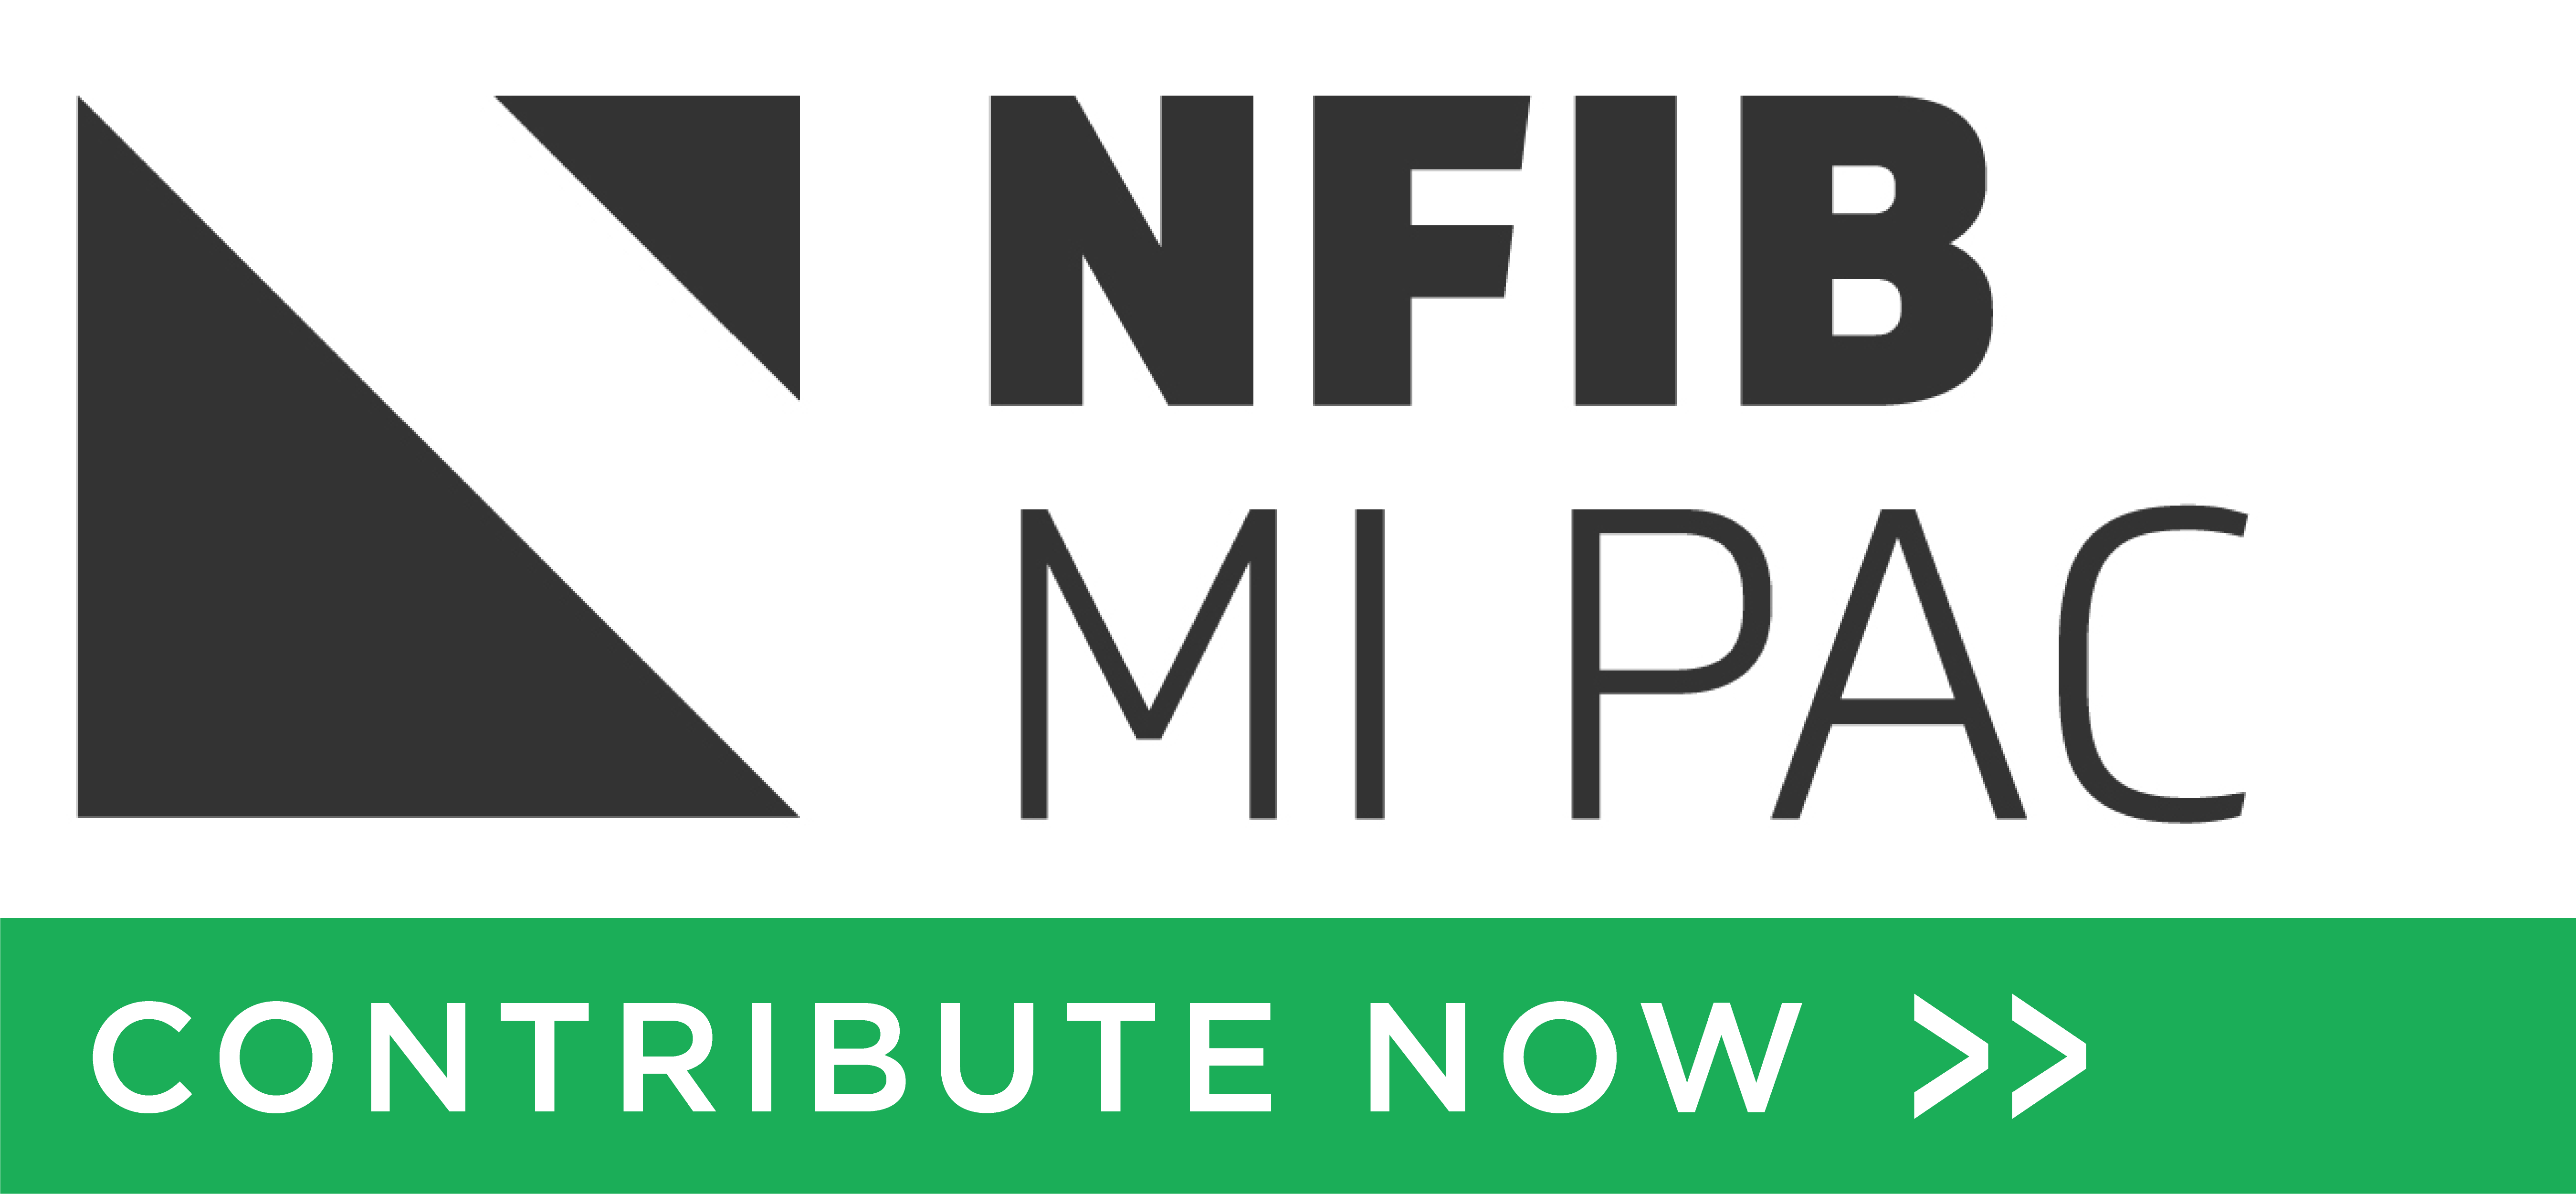 Michigan State PAC Logo